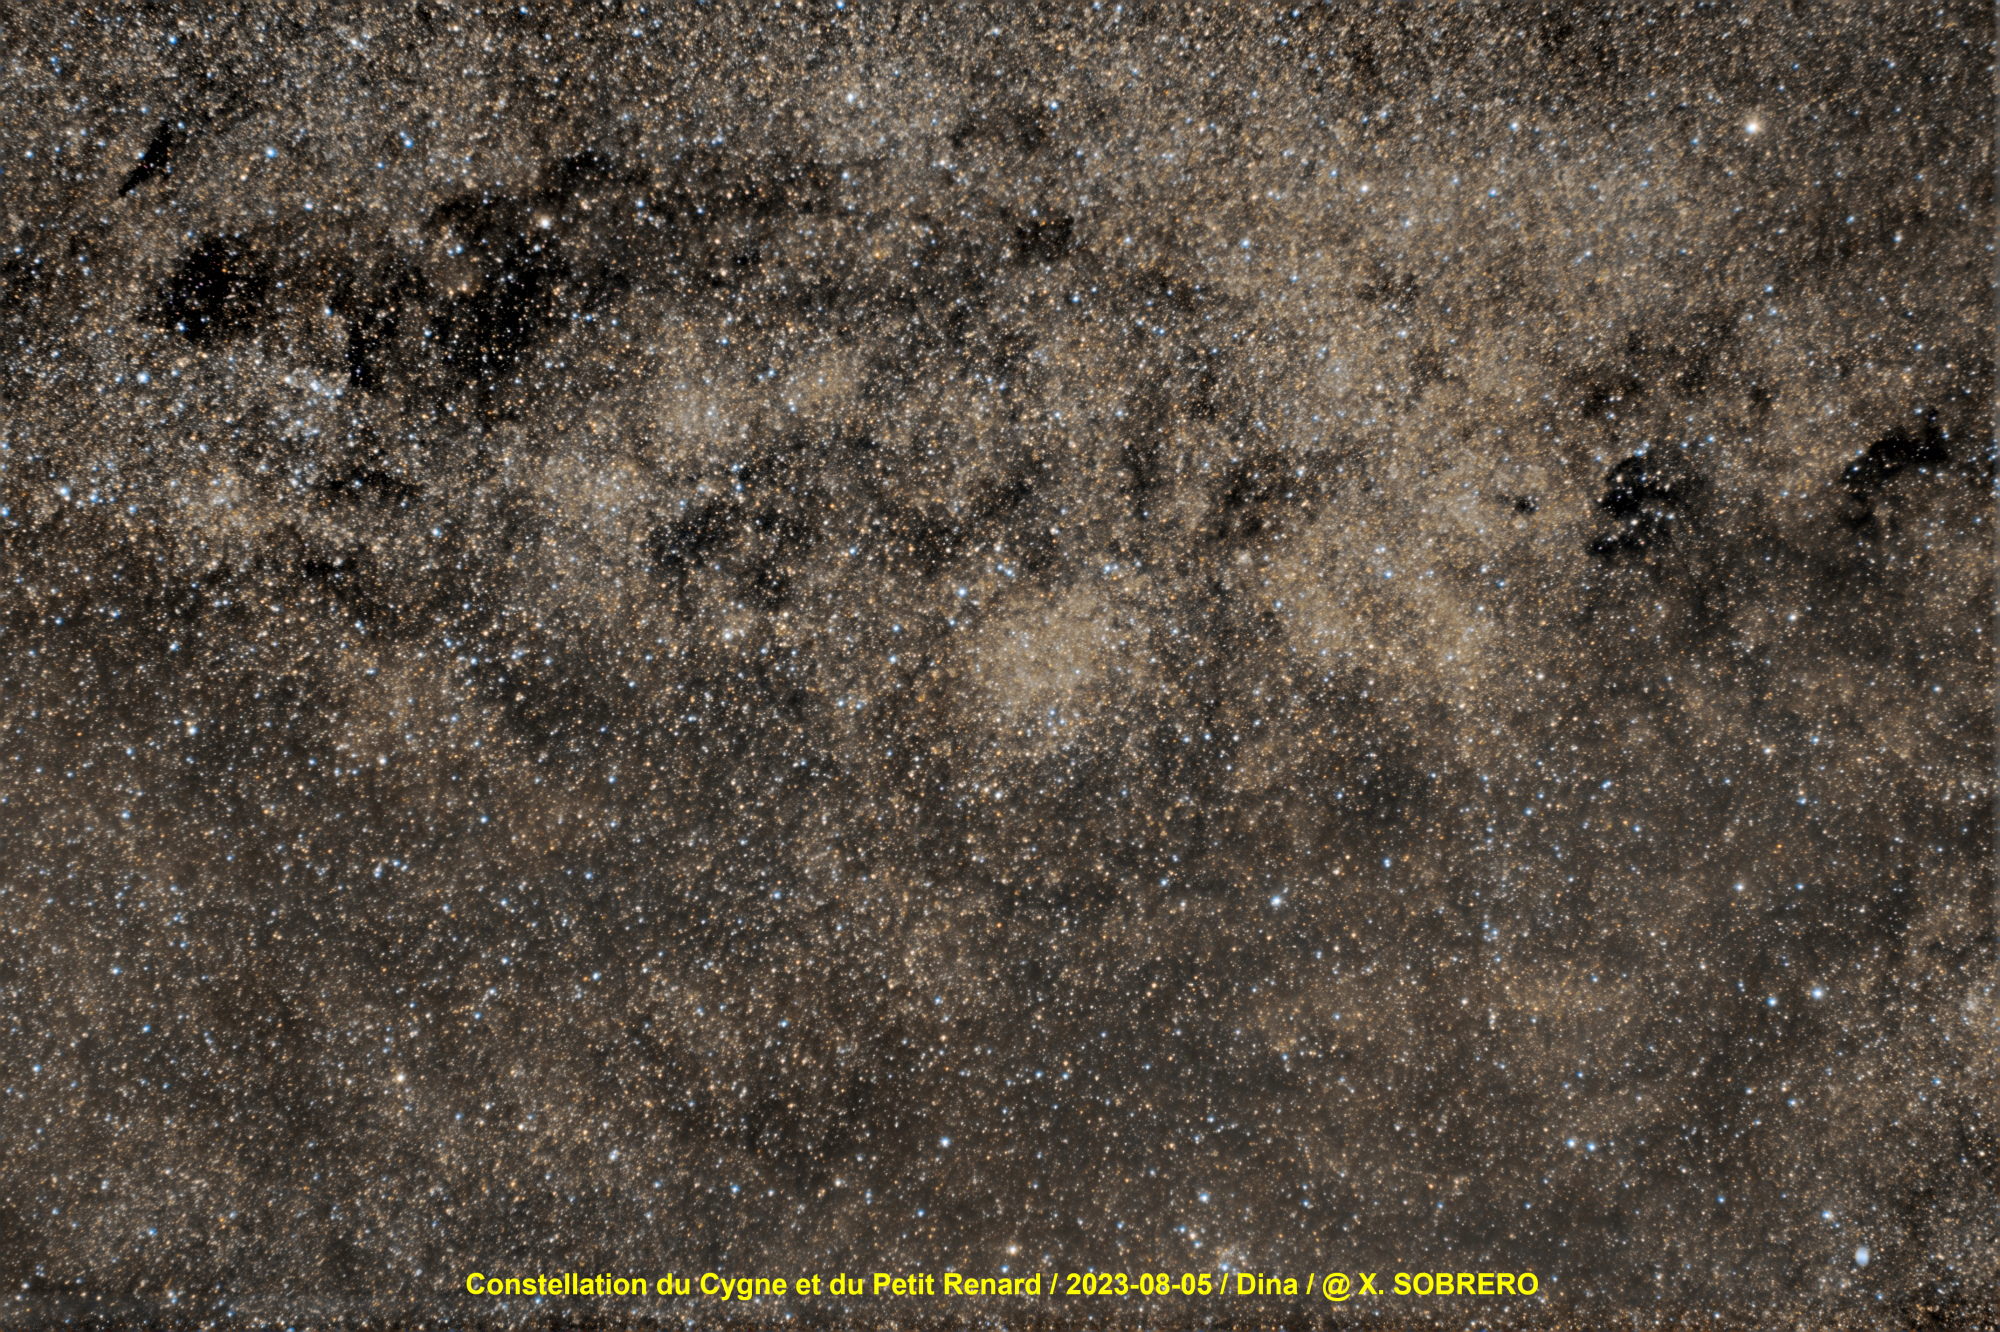 CONSTELLATION_CYGNE_PETIT_RENARD_NGC6842_M27.thumb.jpg.5a15cbe537f03dffac7498b3d6c948ab.jpg